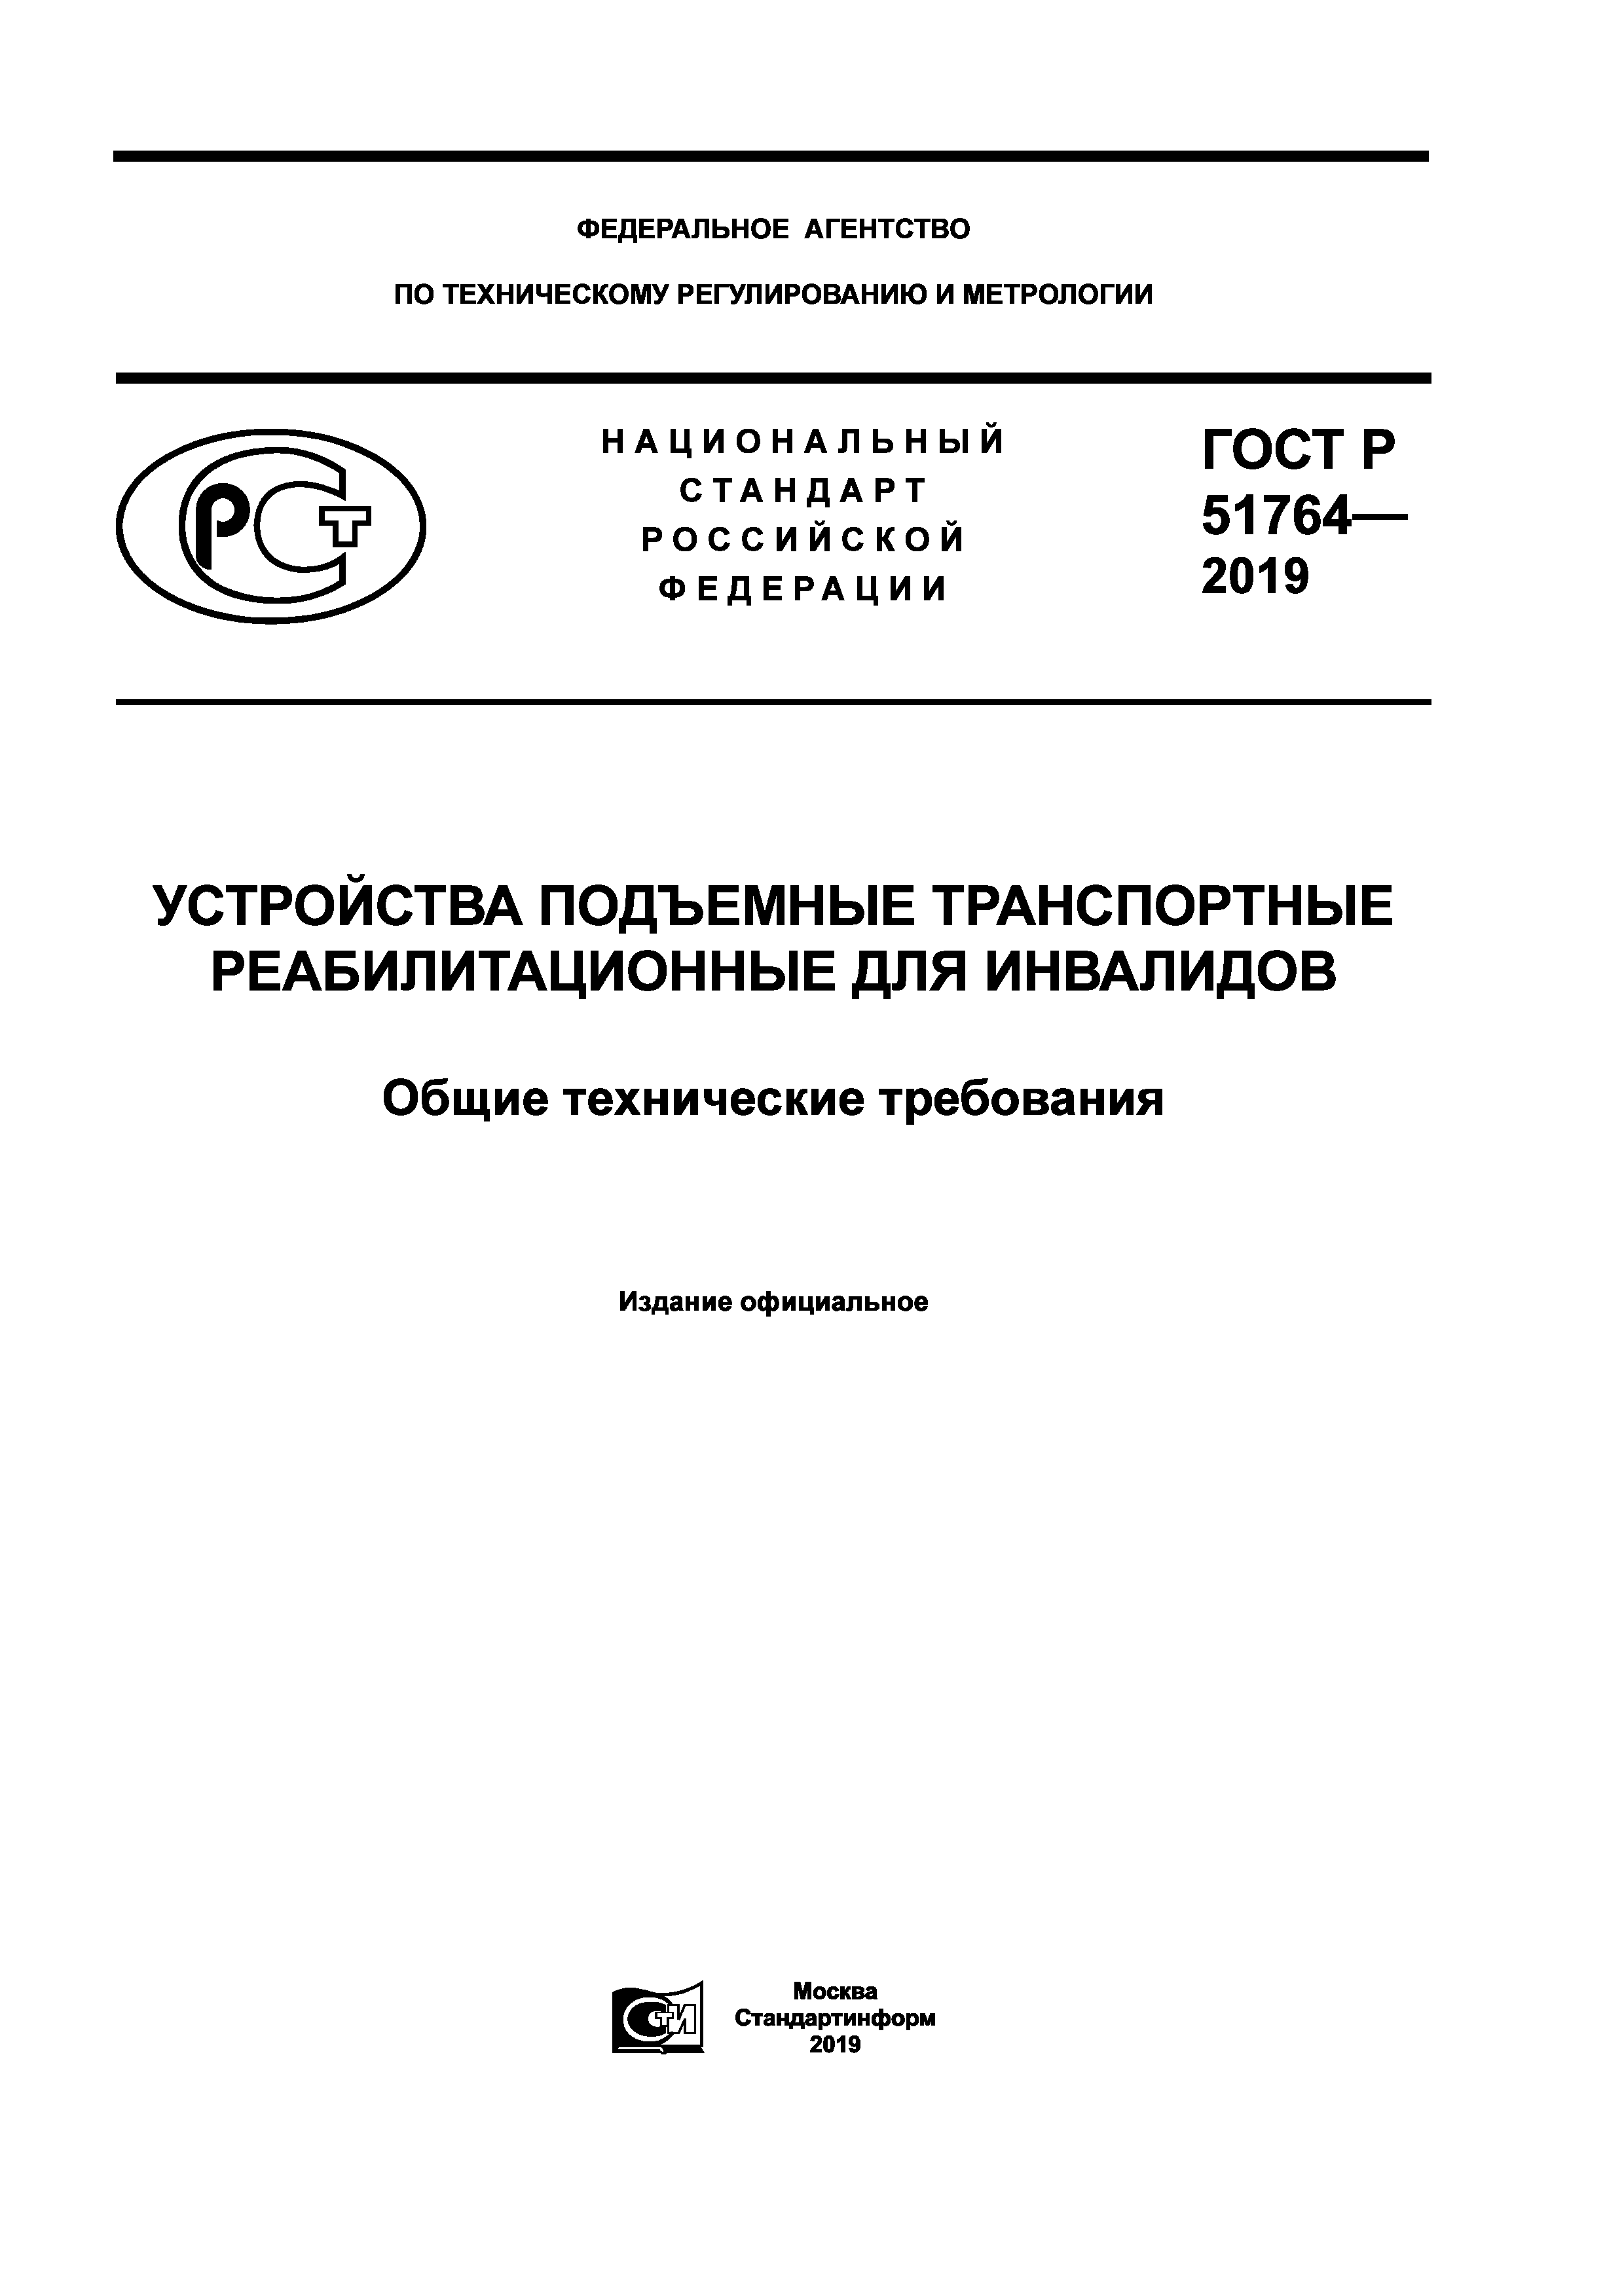 ГОСТ Р 51764-2019